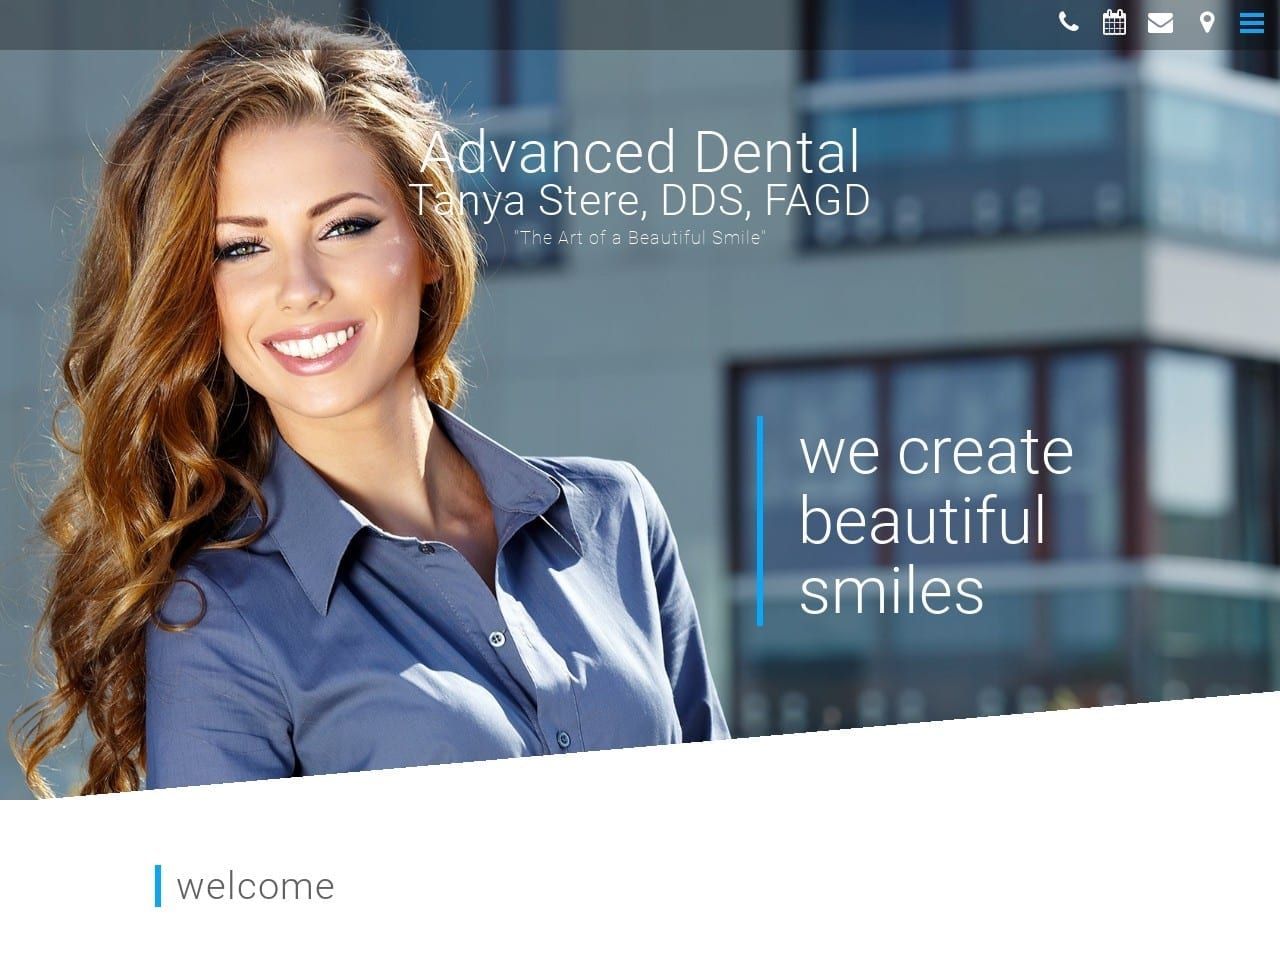 Advanced Dental Tanya Stere DDS FAGD Website Screenshot from advanceddentalnv.com